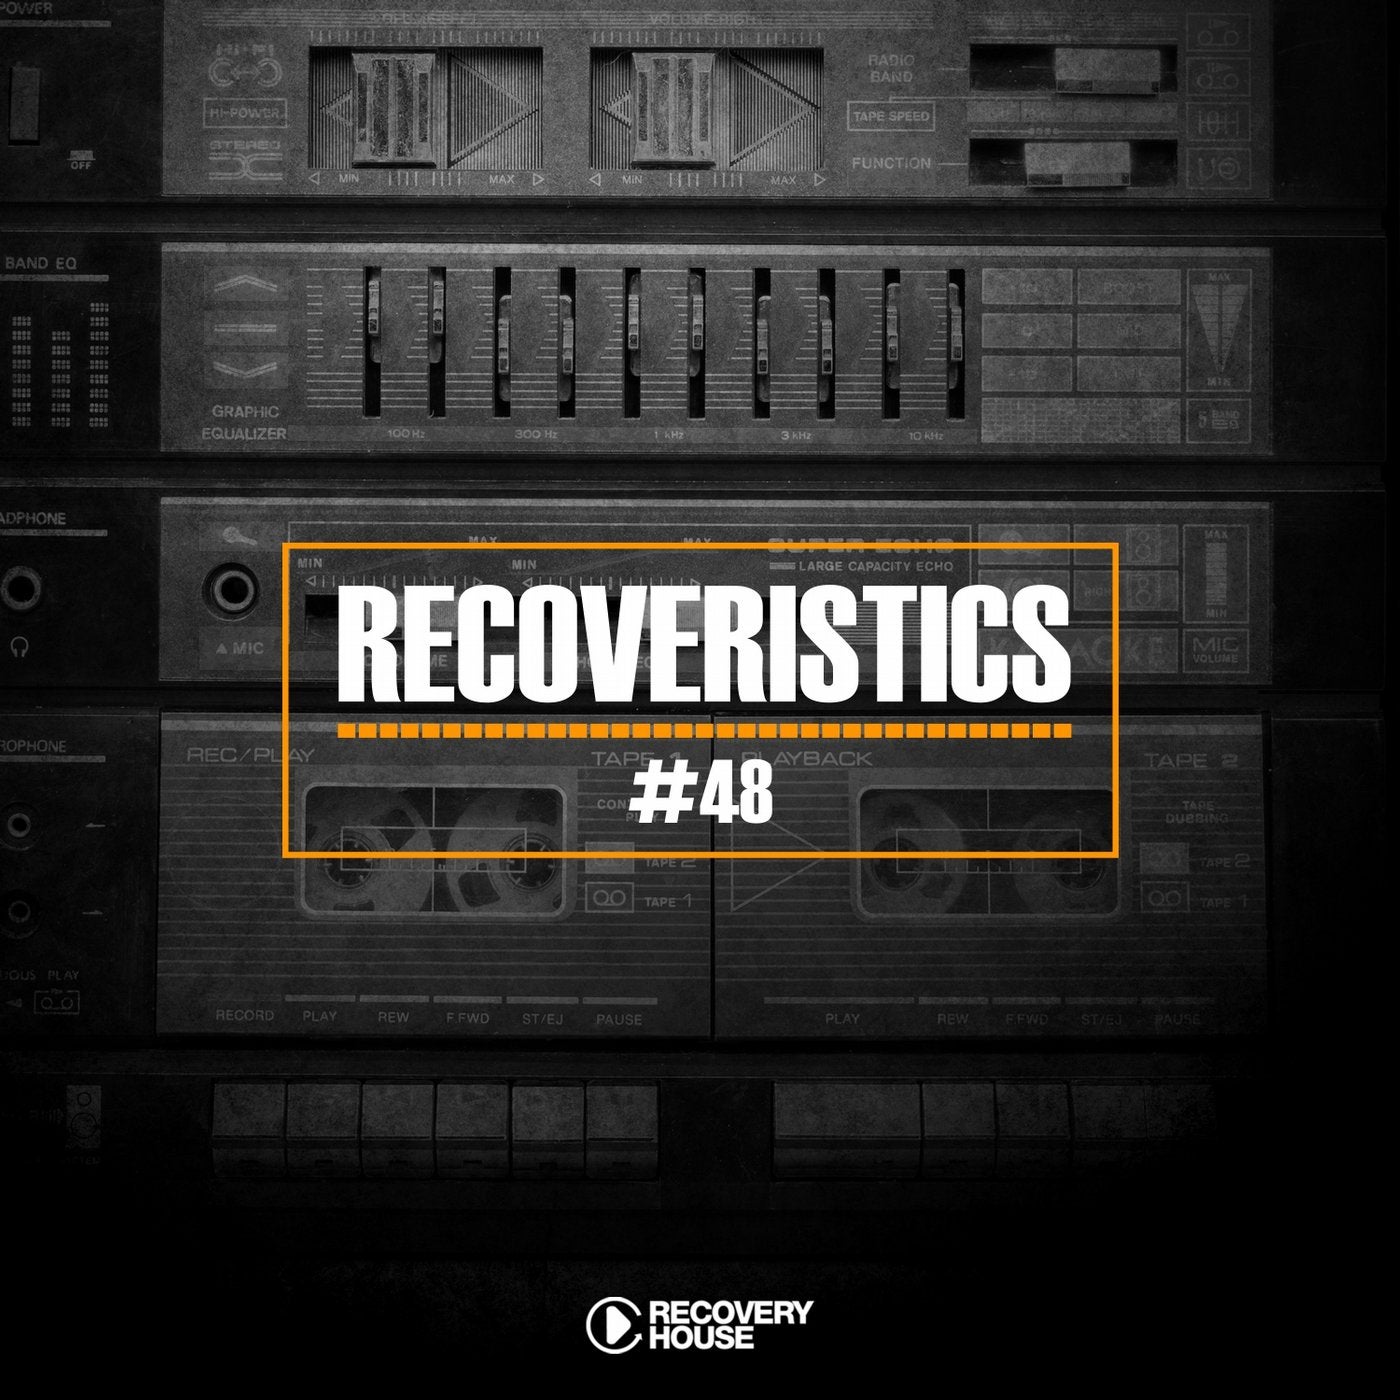 Recoveristics #48